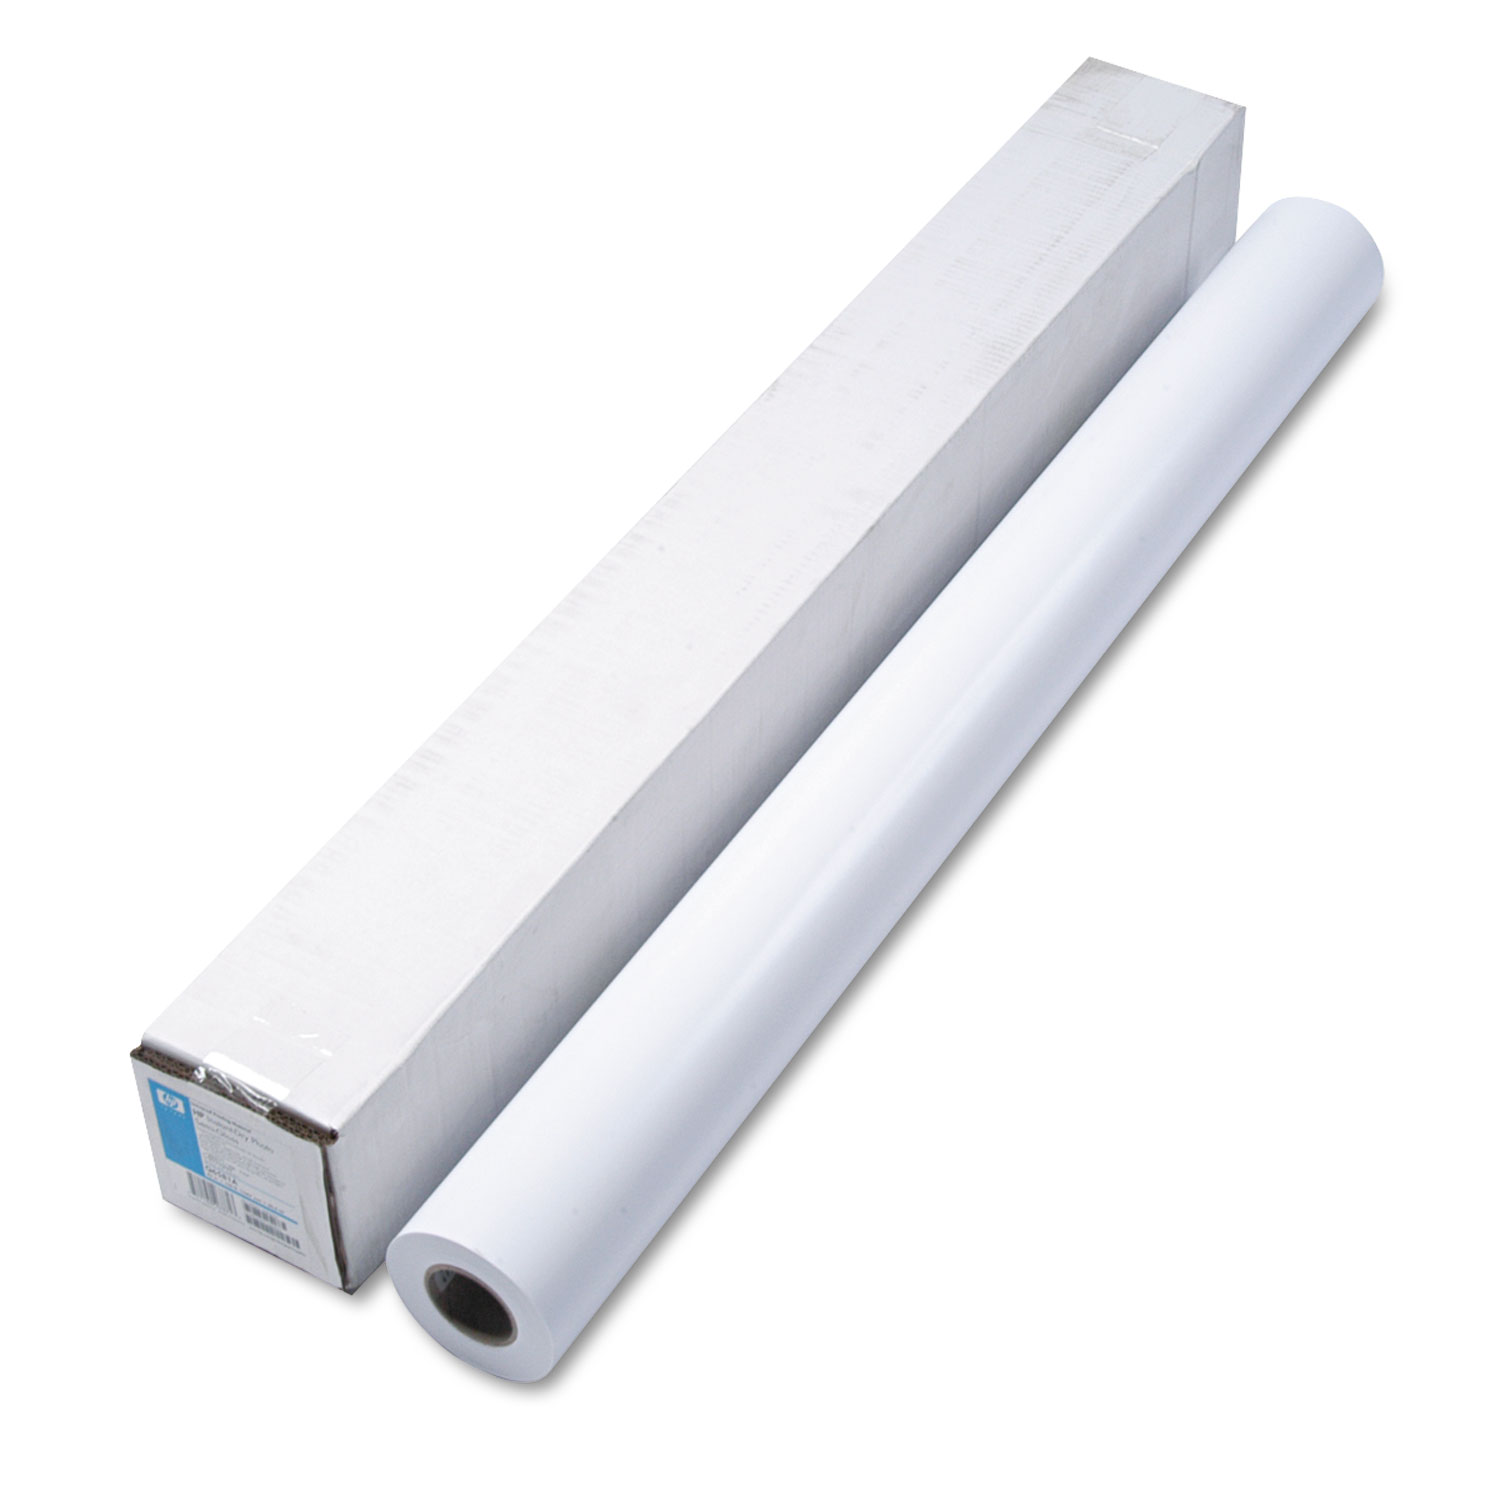  HP Q6581A DesignJet Inkjet Large Format Paper, Instant-Dry, 7 mil, 42 x 100 ft, Satin White (HEWQ6581A) 